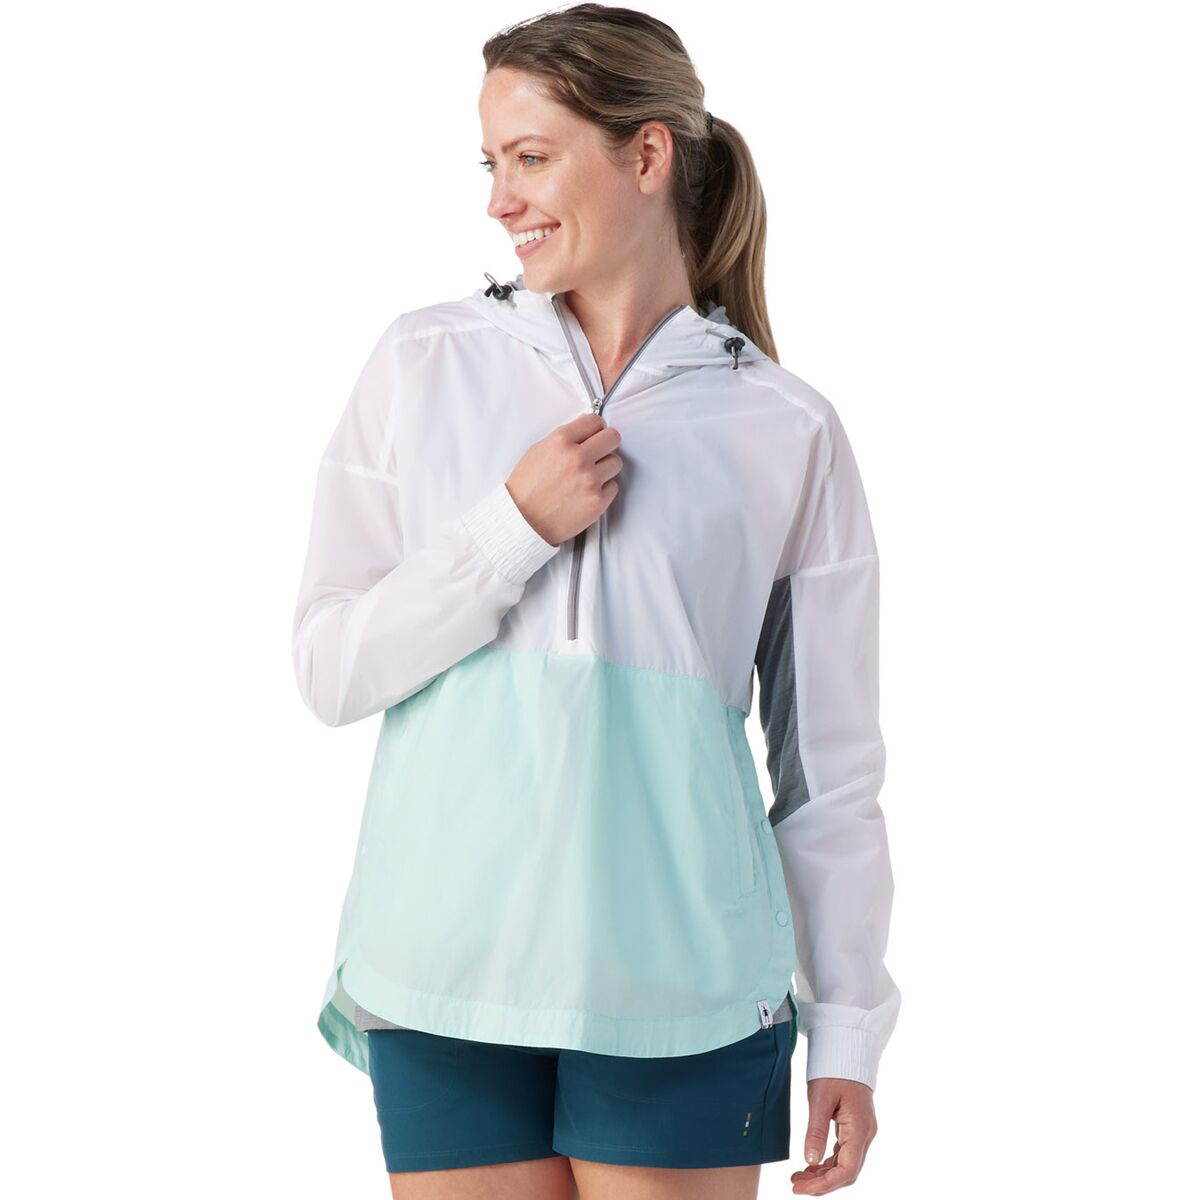 Smartwool Merino Sport Ultra Light Anorak Pullover Jacket - Women's